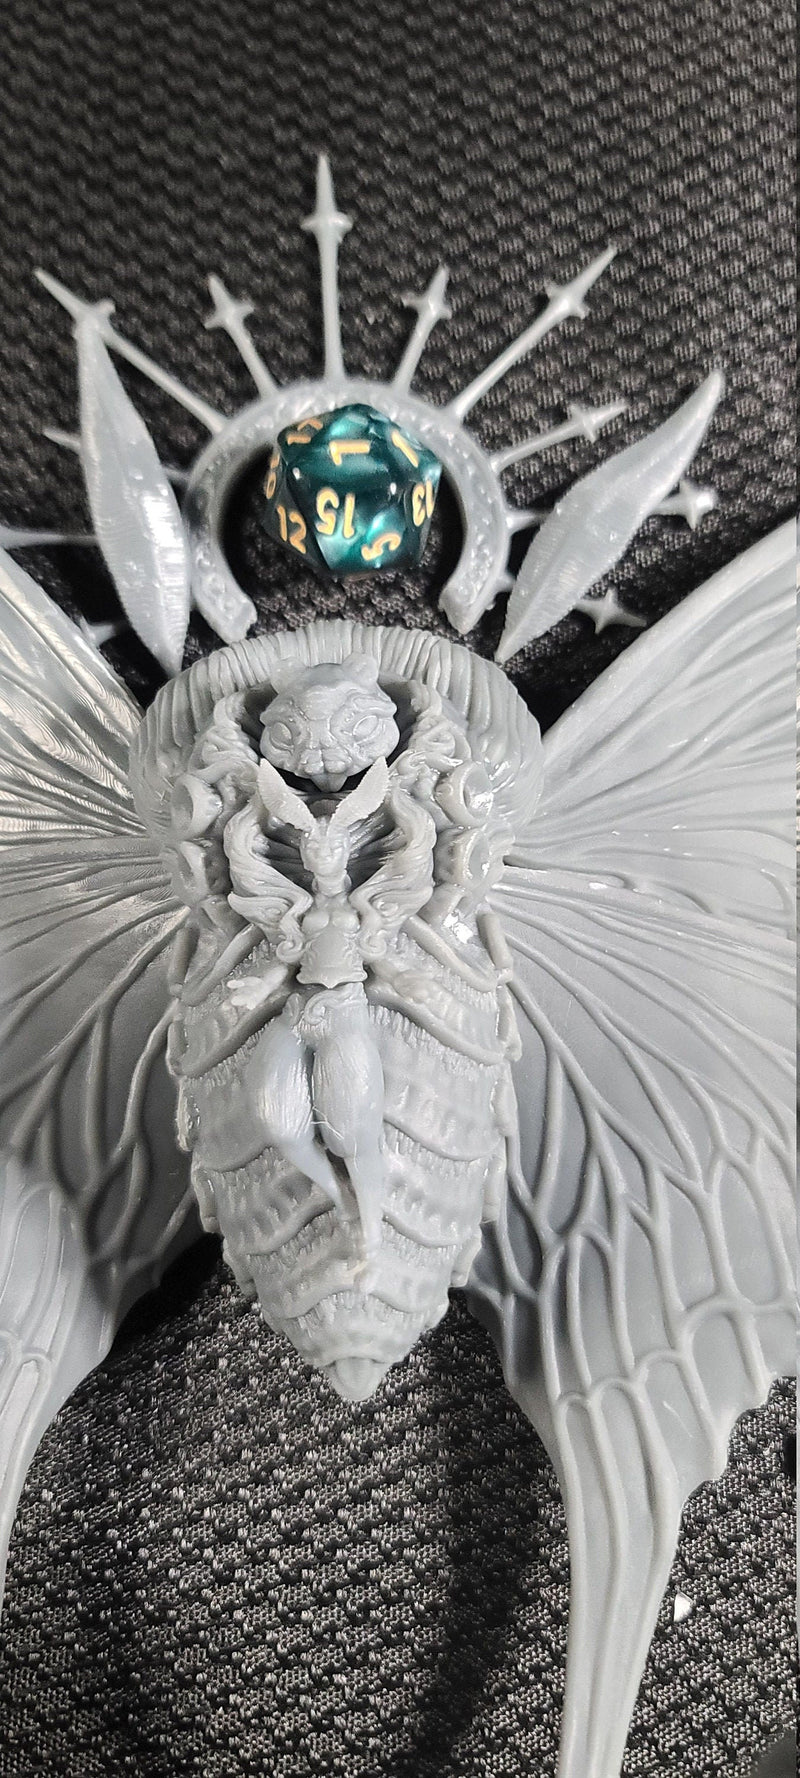 Pontifex Psilomonedes the Noctuoidea 'Owl Moth' High Priest | 32mm